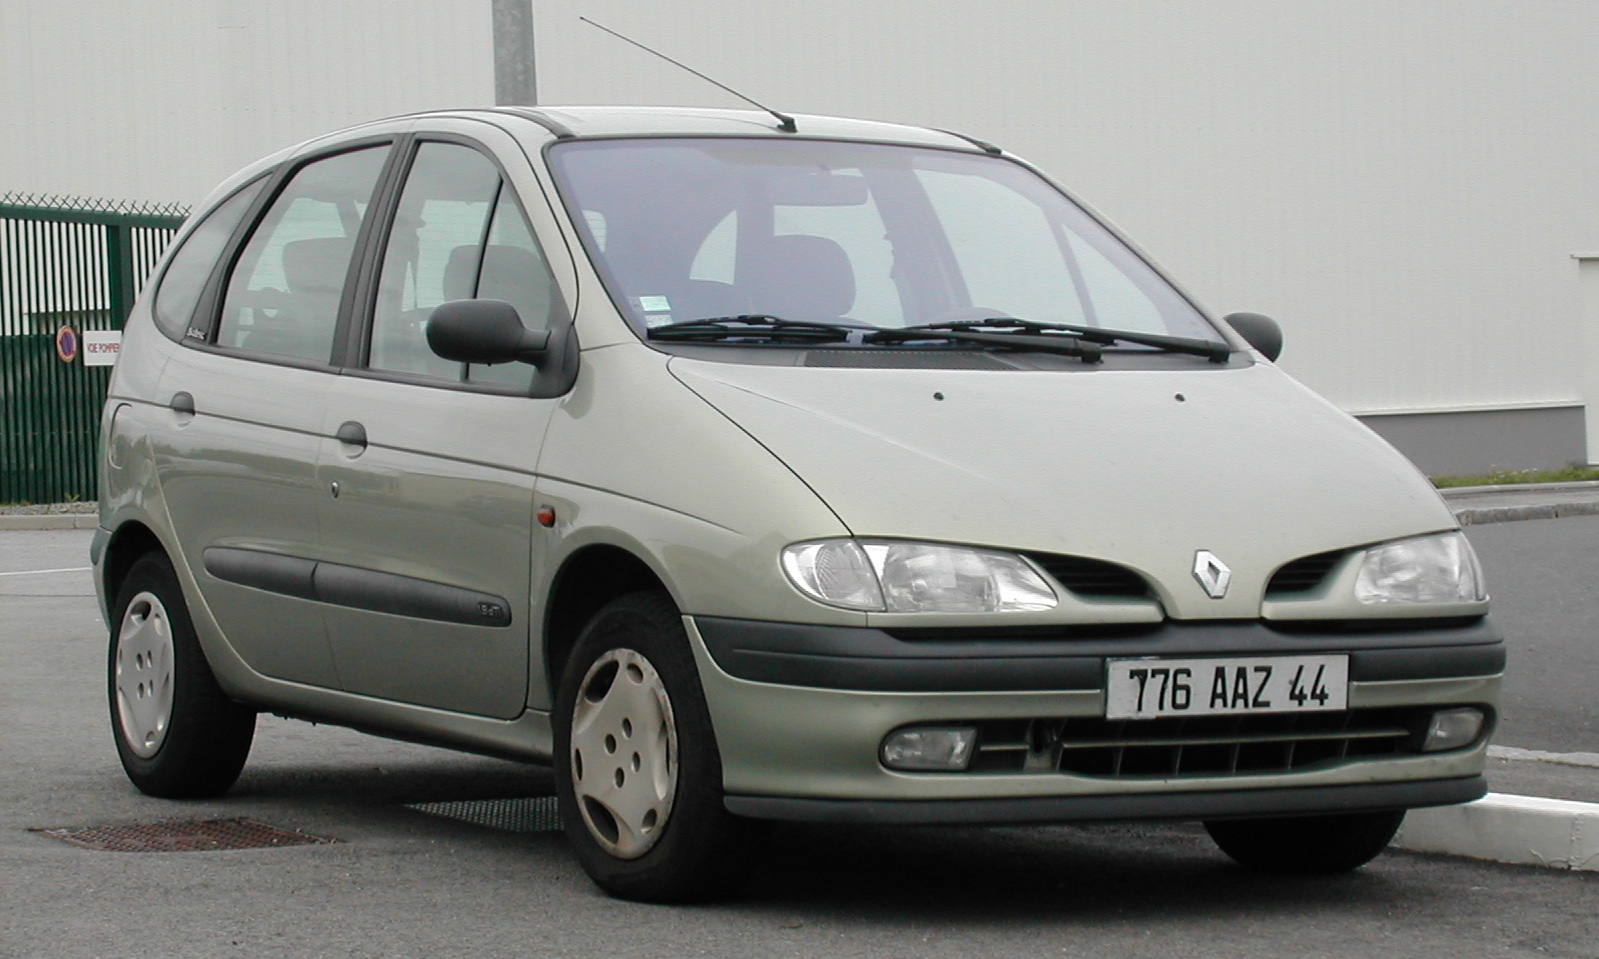 Renault Mégane - Wikimedia Commons